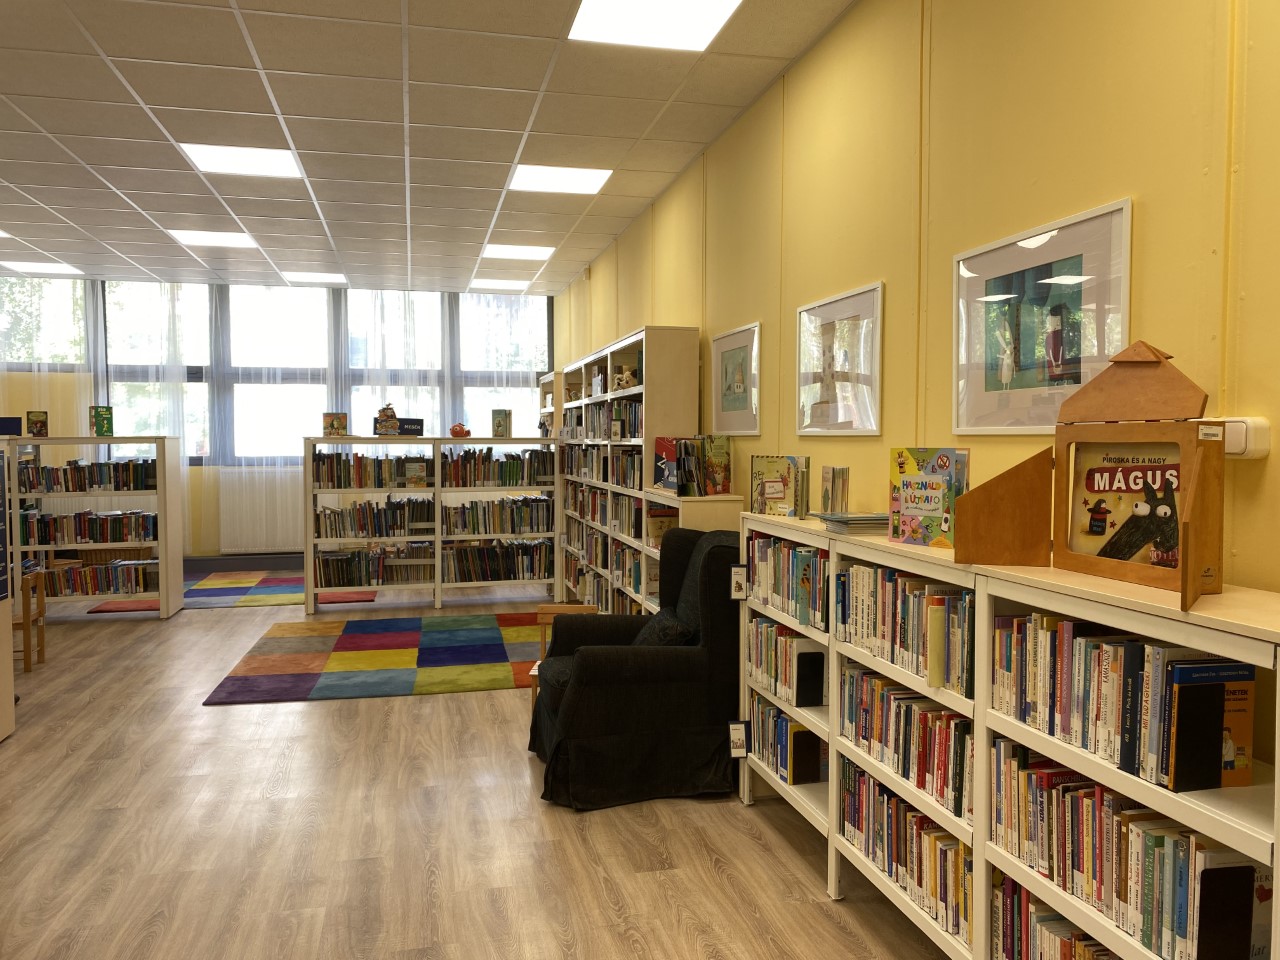 Interior of children's library